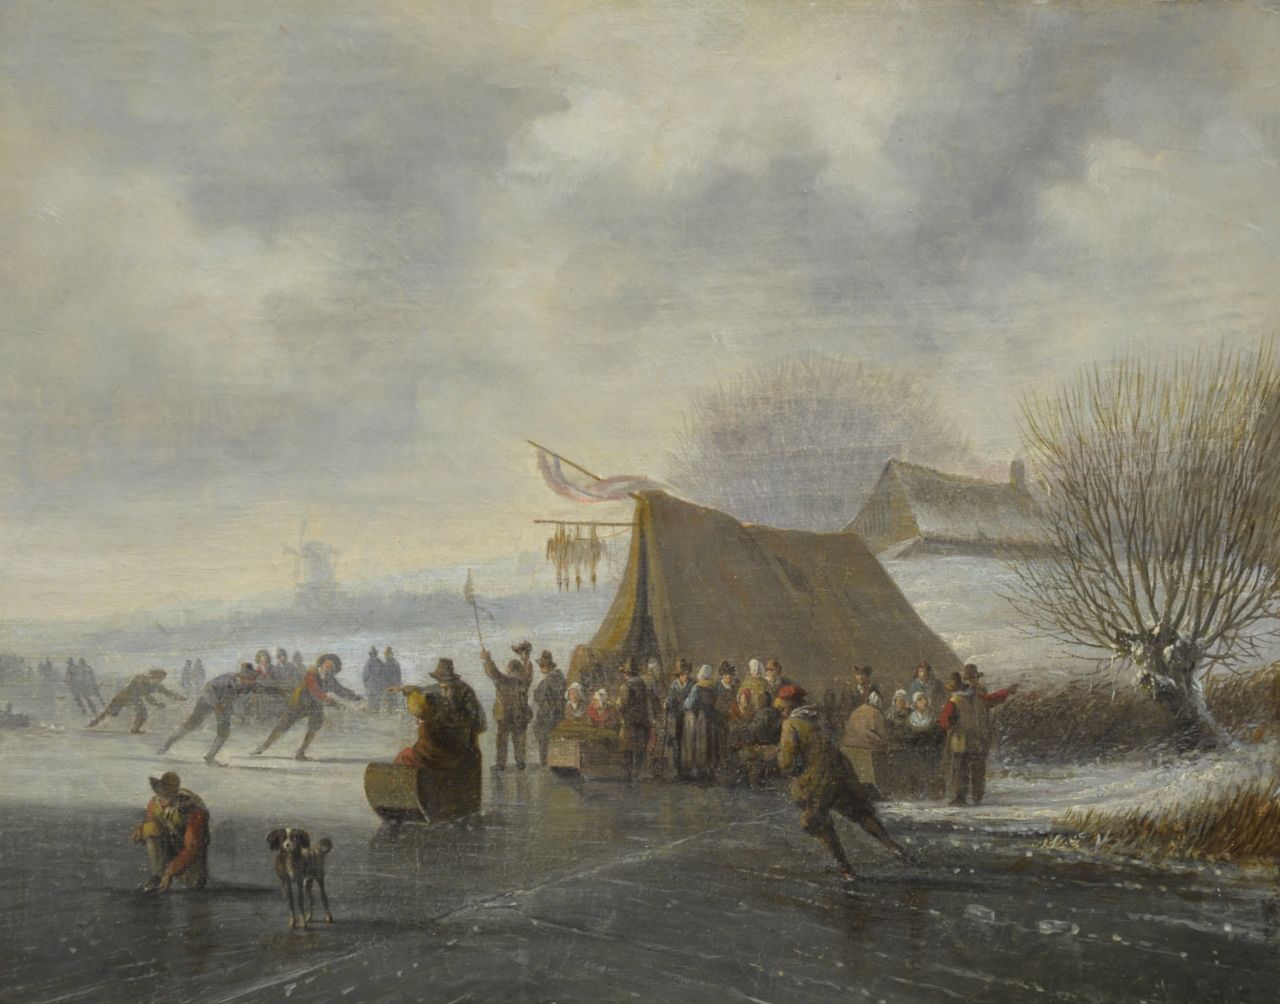 Stok J. van der | Jacobus van der Stok, Skating fun, oil on canvas 27.0 x 34.0 cm, signed l.r.